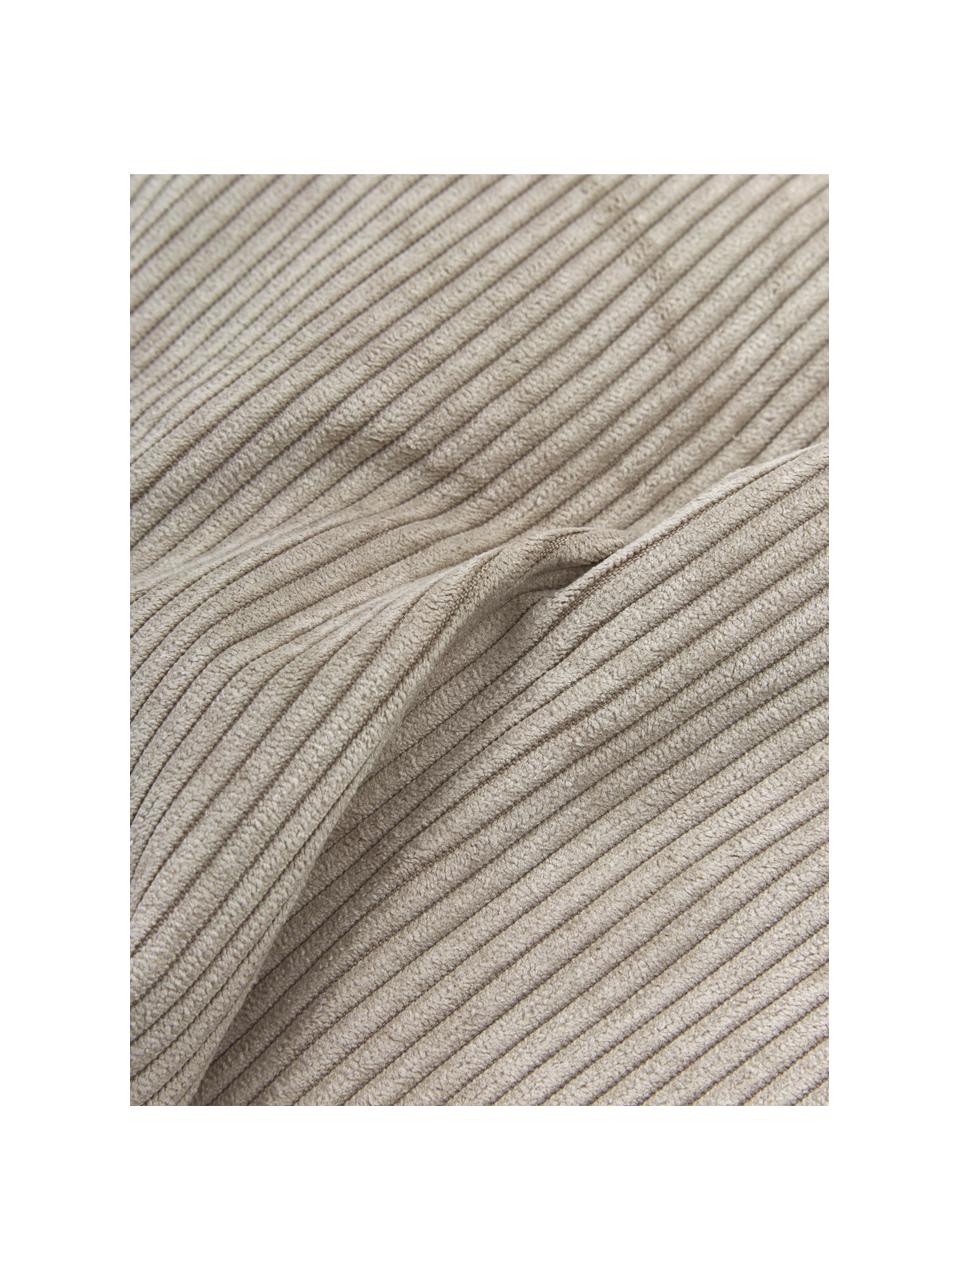 Bankkussen Lennon van corduroy, Corduroy beige, B 60 x L 60 cm